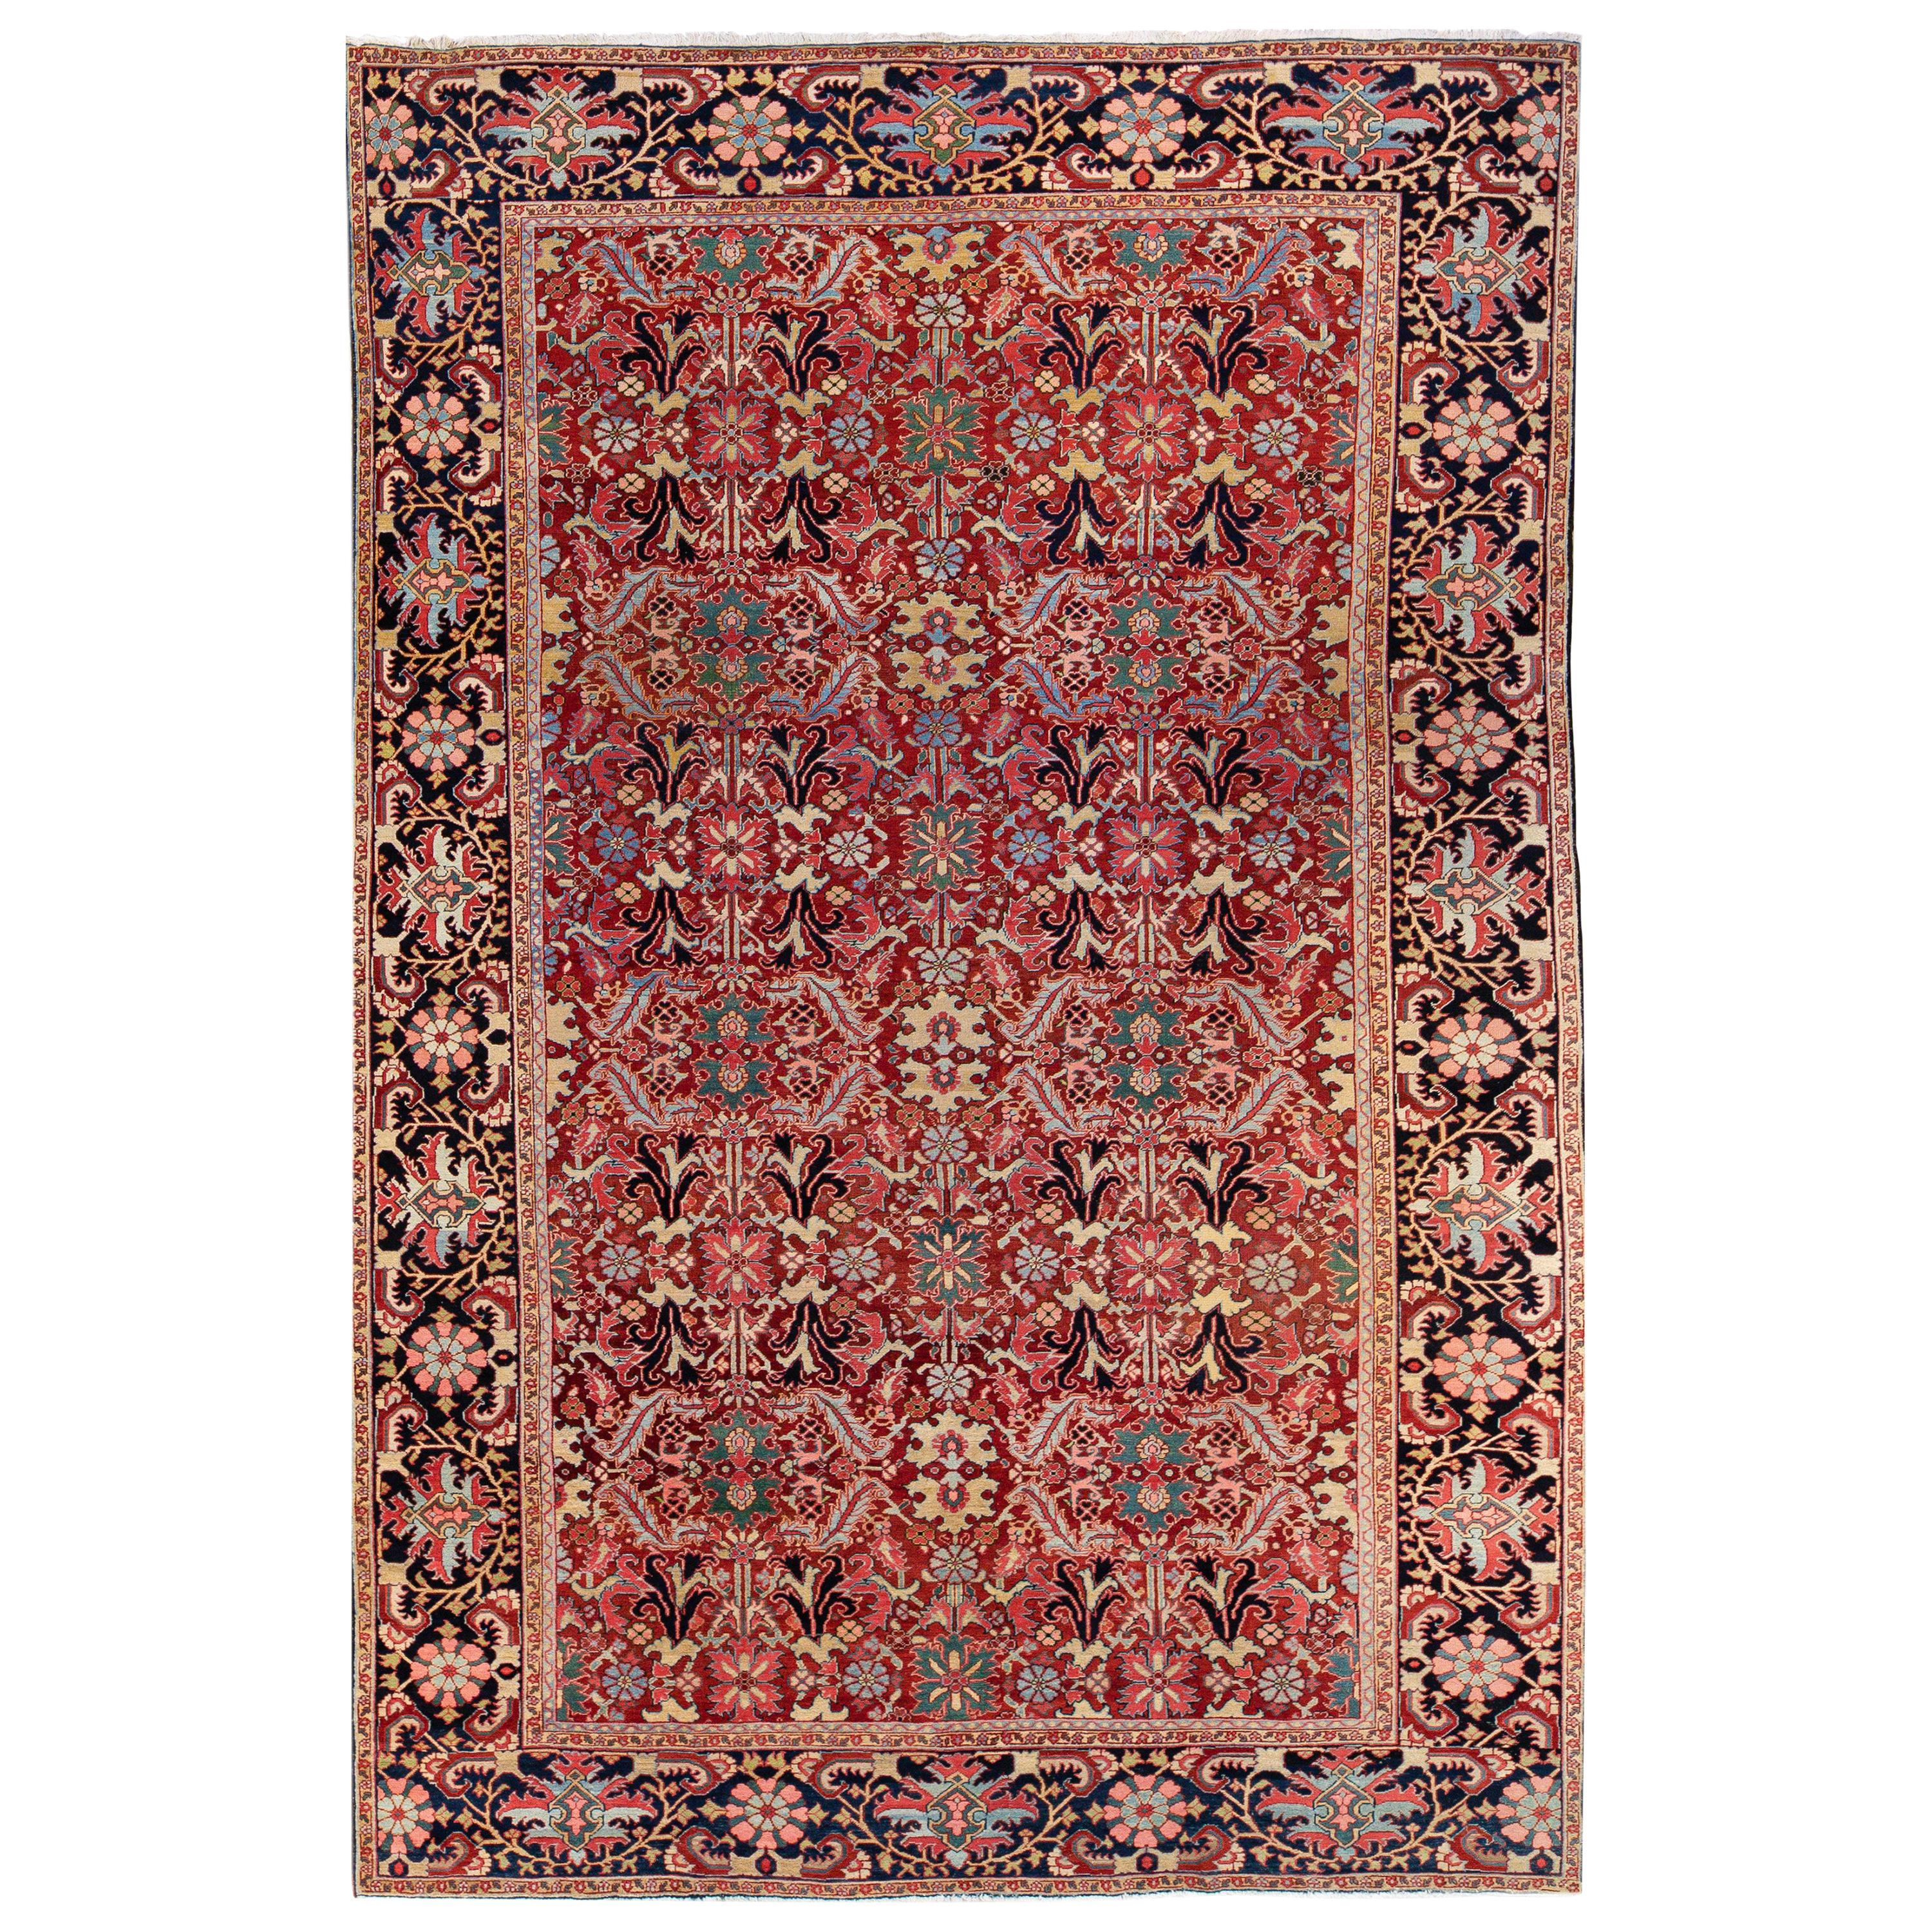 Antique Persian Heriz Handmade Multicolor Floral Designed Red Oversize Wool Rug For Sale